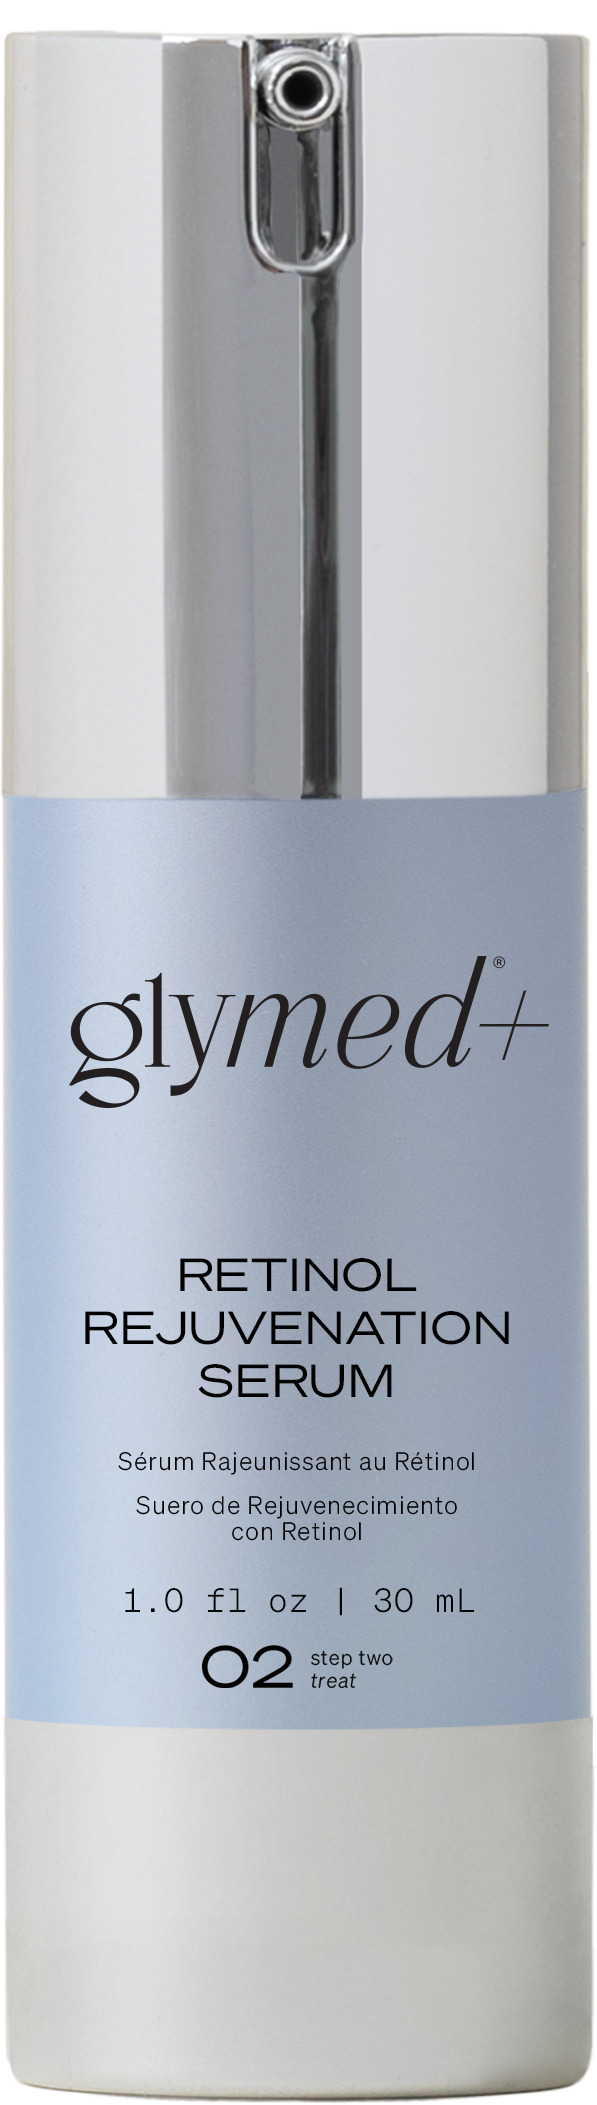 Retinol Rejuvenation Serum